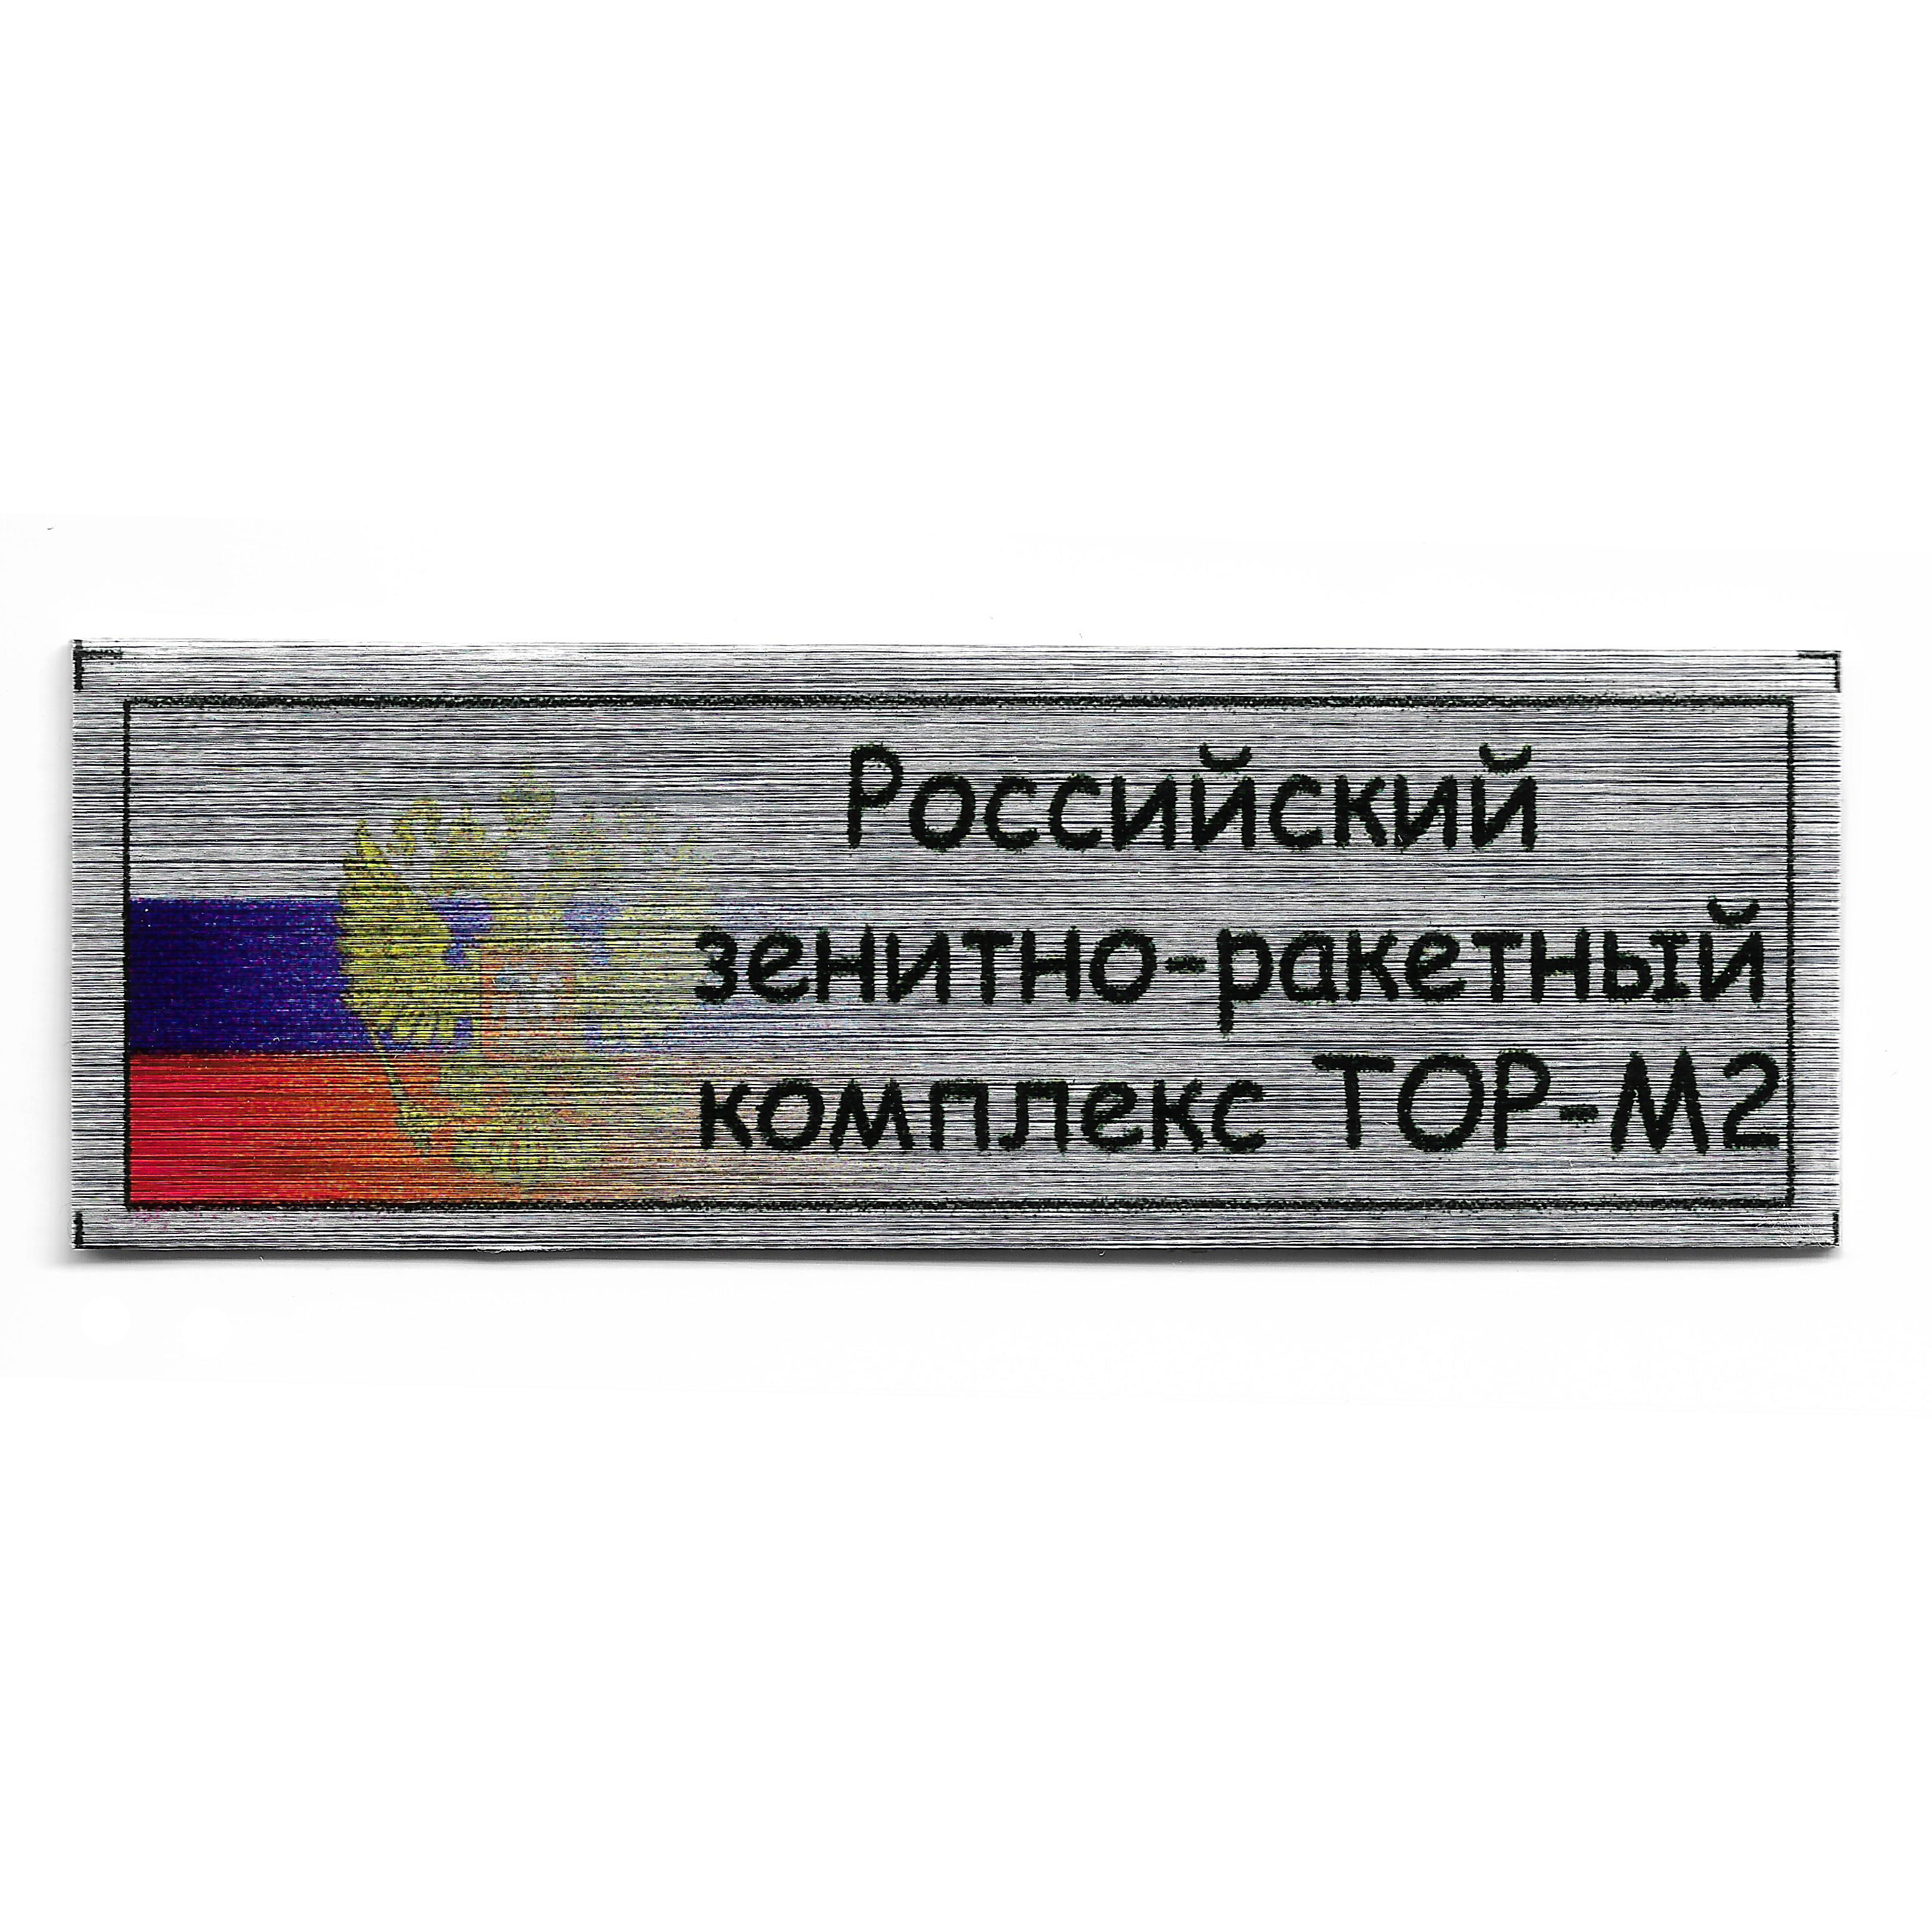 Т336 Plate Табличка для Российского зенитно-ракетного комплекса ТОР-М2, 60х20 мм, цвет серебро (флаг)